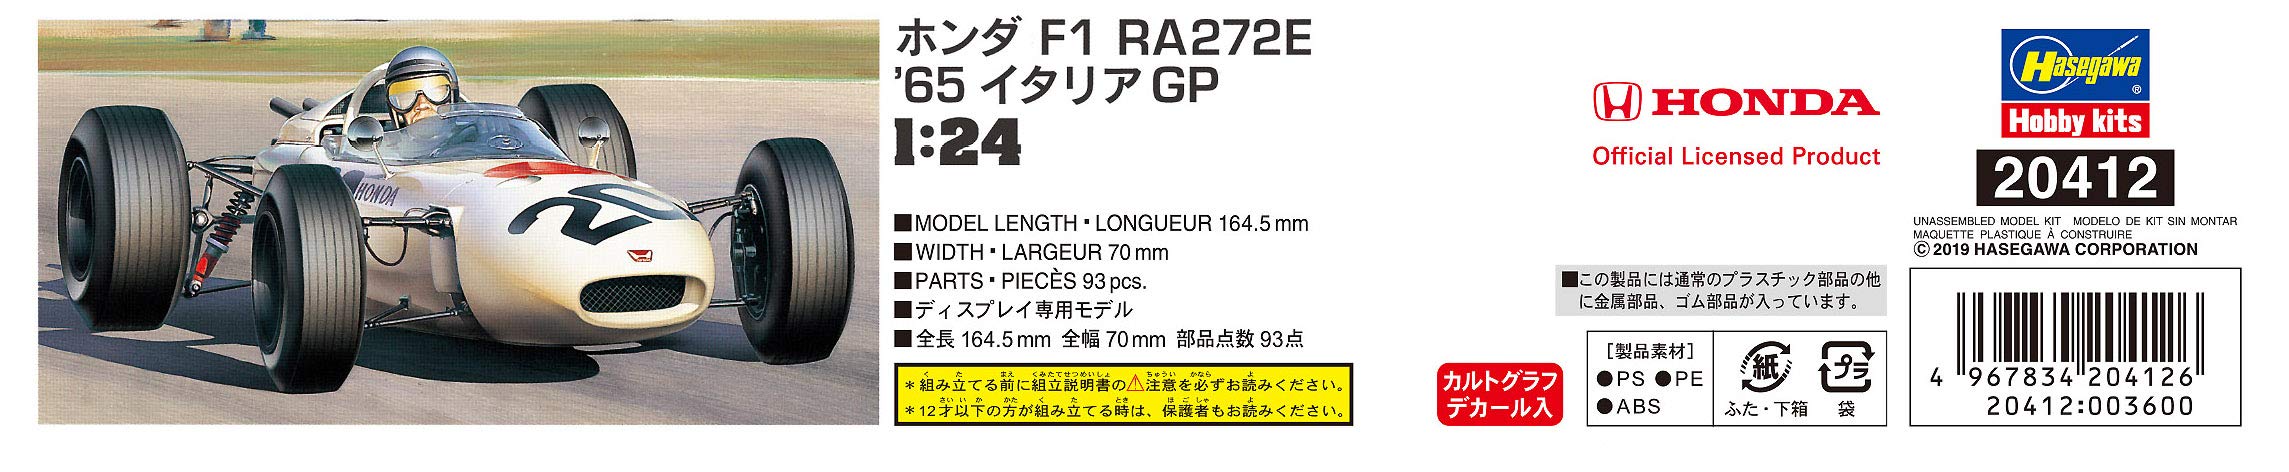 Hasegawa 20412 Honda F1 Ra272E 65 Italian Gp 1/24 Scale Racing Car Model Kit